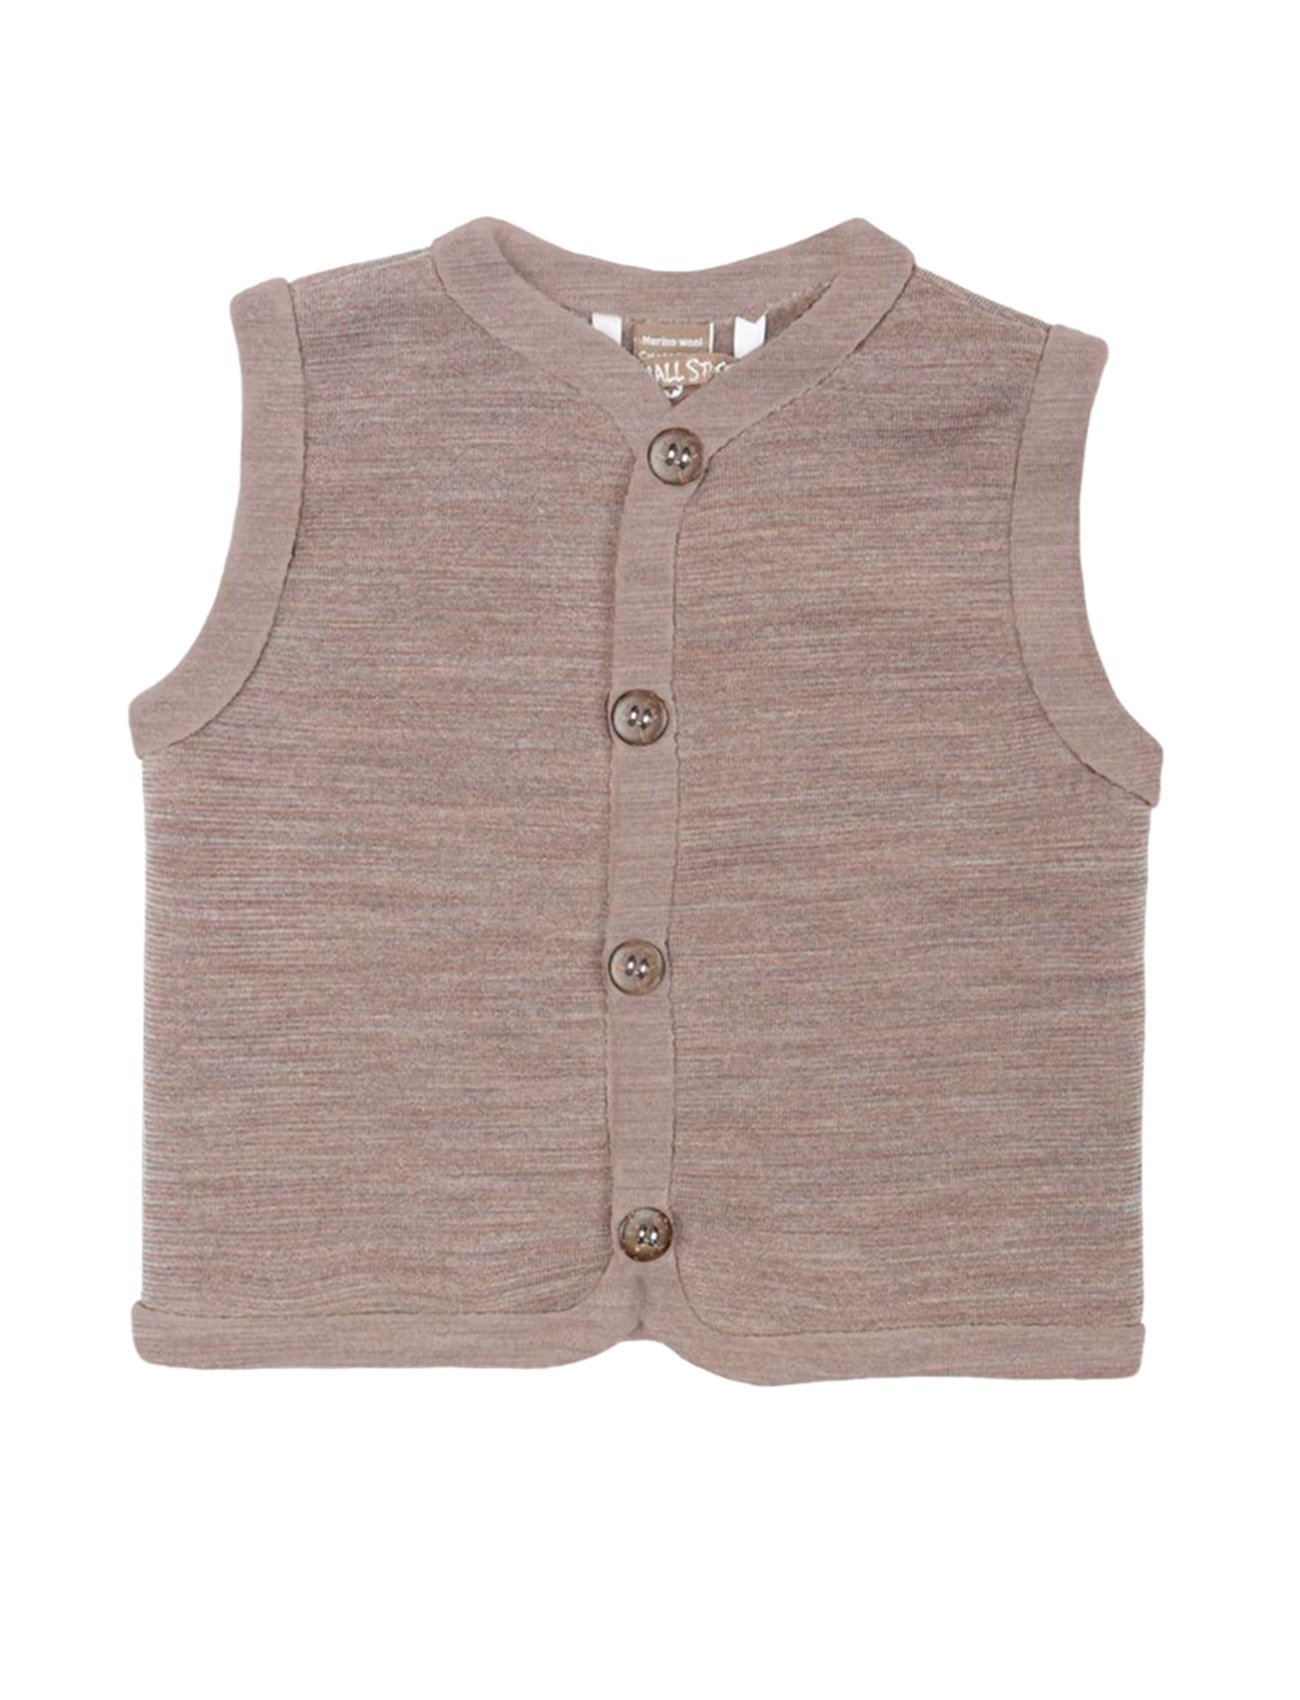 Vest, Merino Wool W. Buttons, Powder Tops Vests Brown Smallstuff